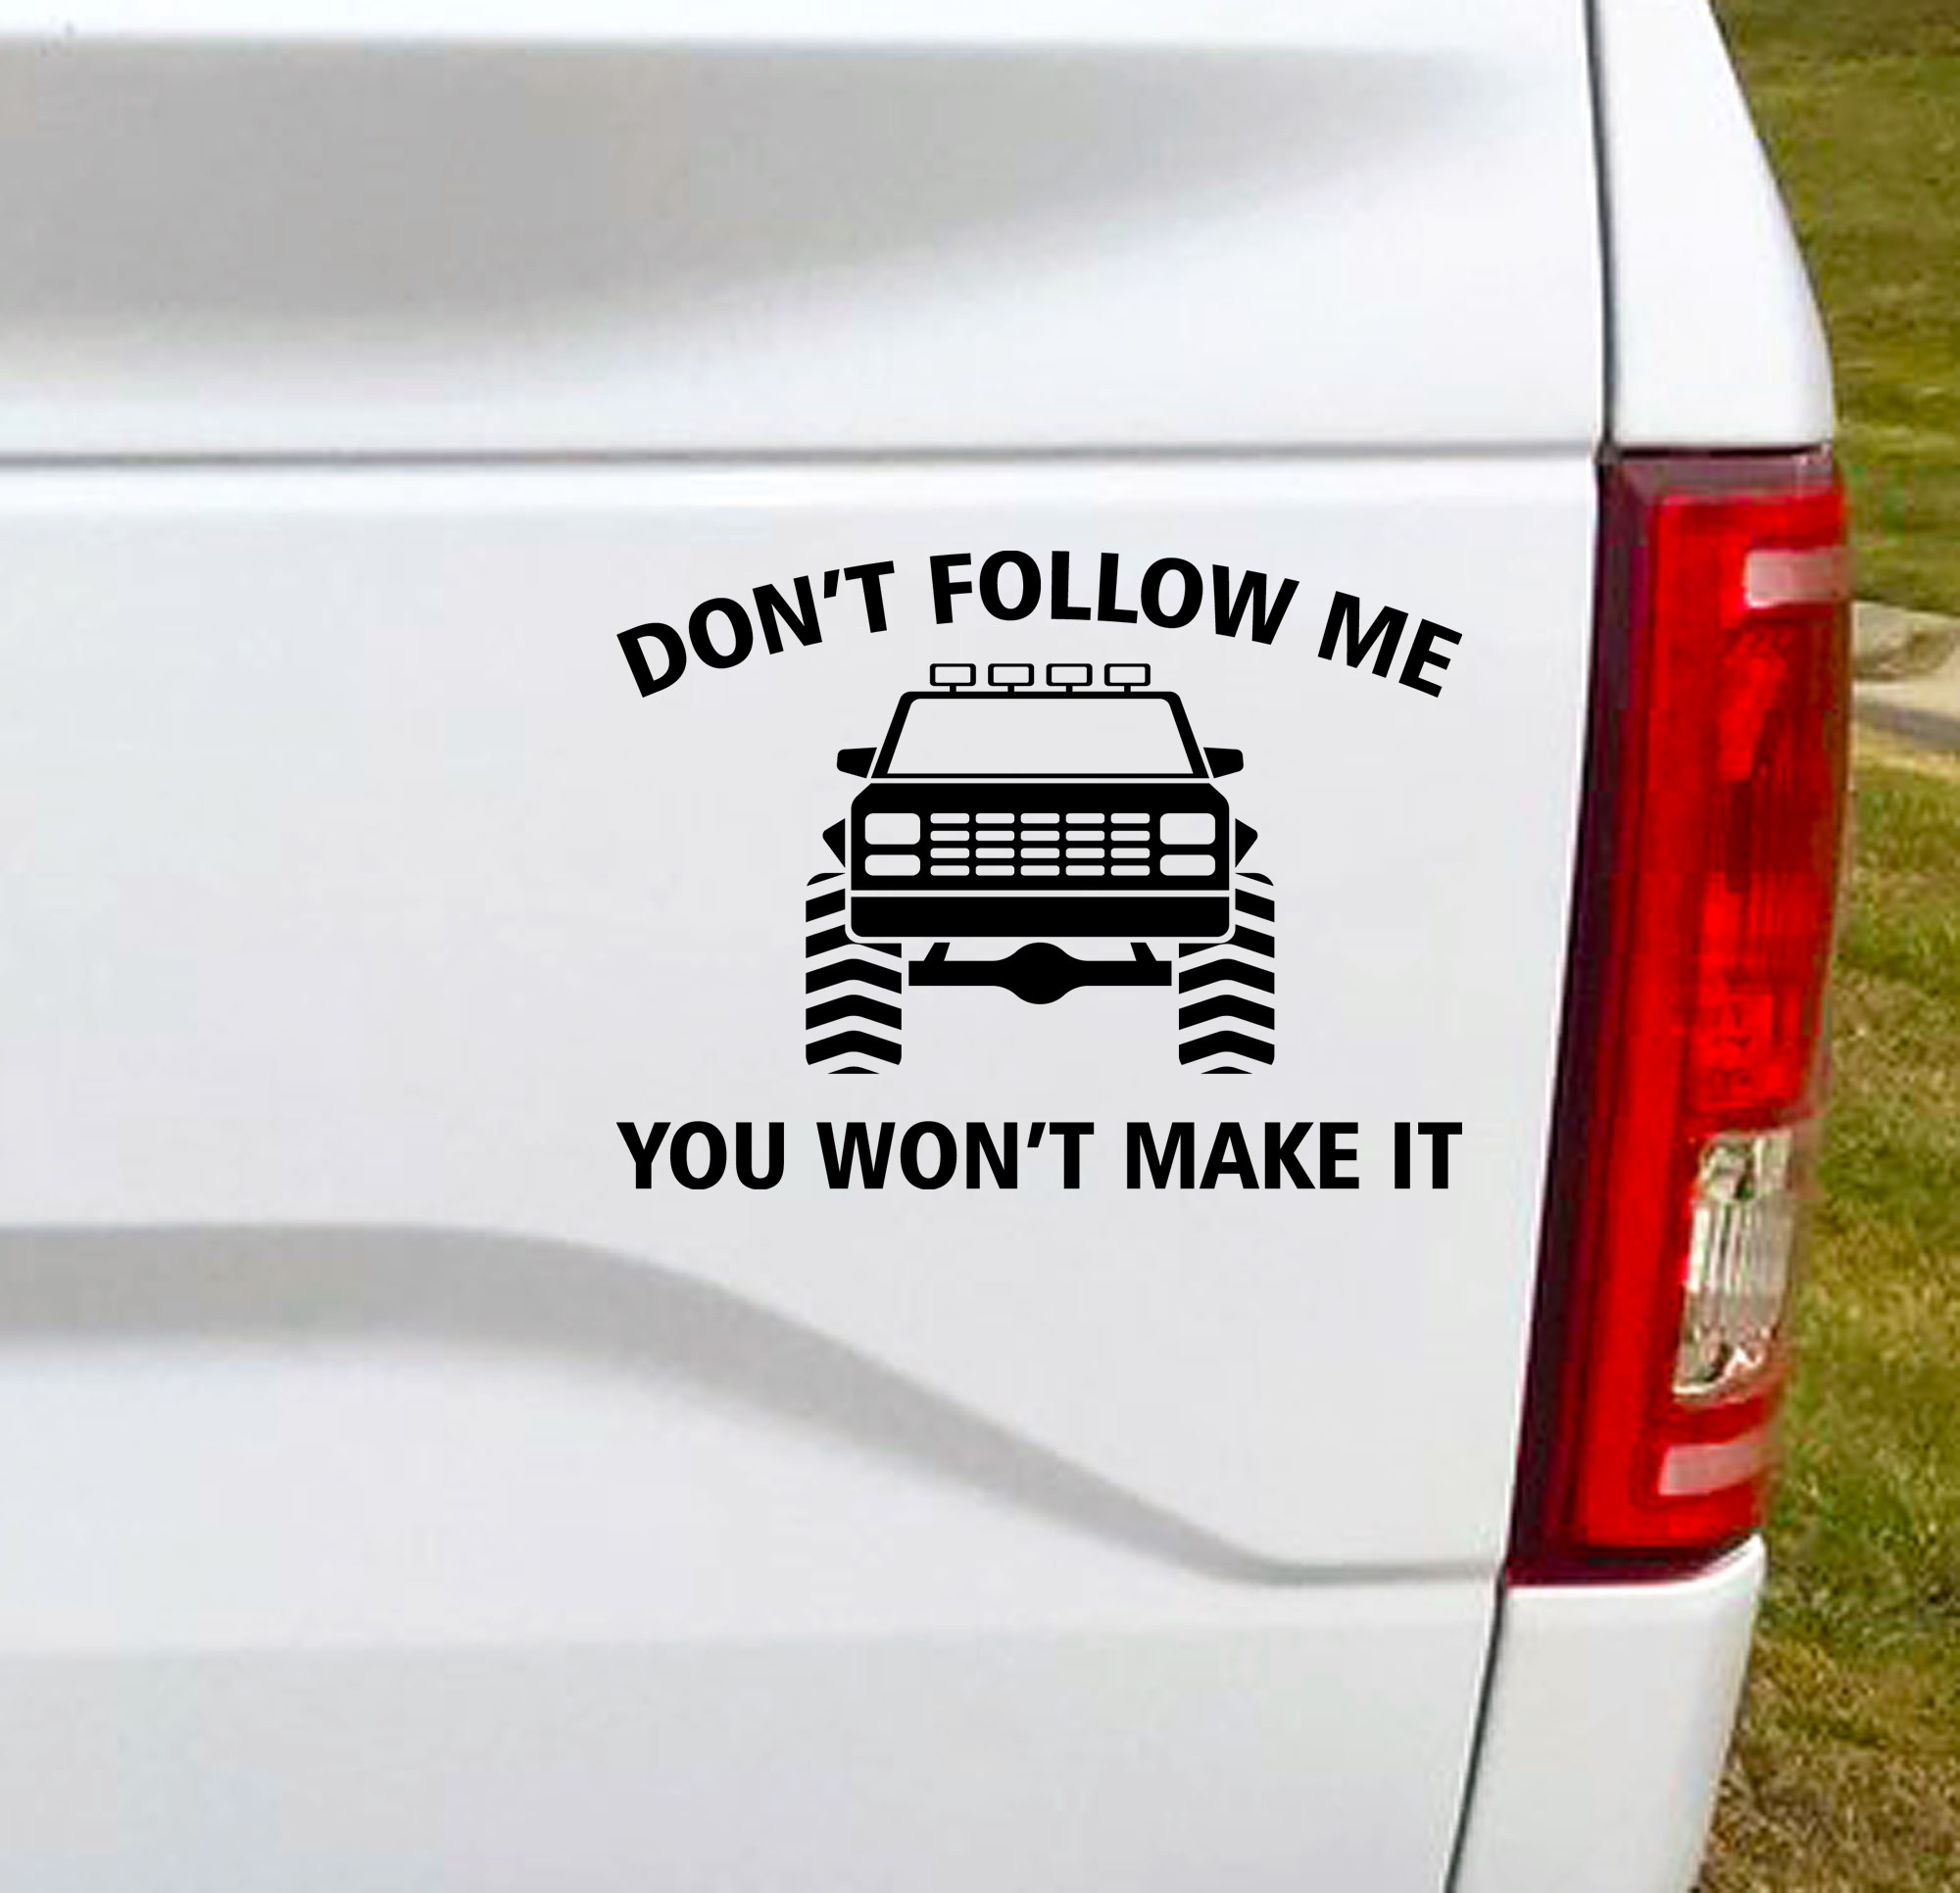 Don't Follow Me You Won't Make It Vinyl Car Decal Bumper Sticker. Truth!  6"W x 4.5"H Car Decal, Car Sticker, Car Vinyl, Bumper Sticker, Vinyl Stickers, Vinyl Sticker.